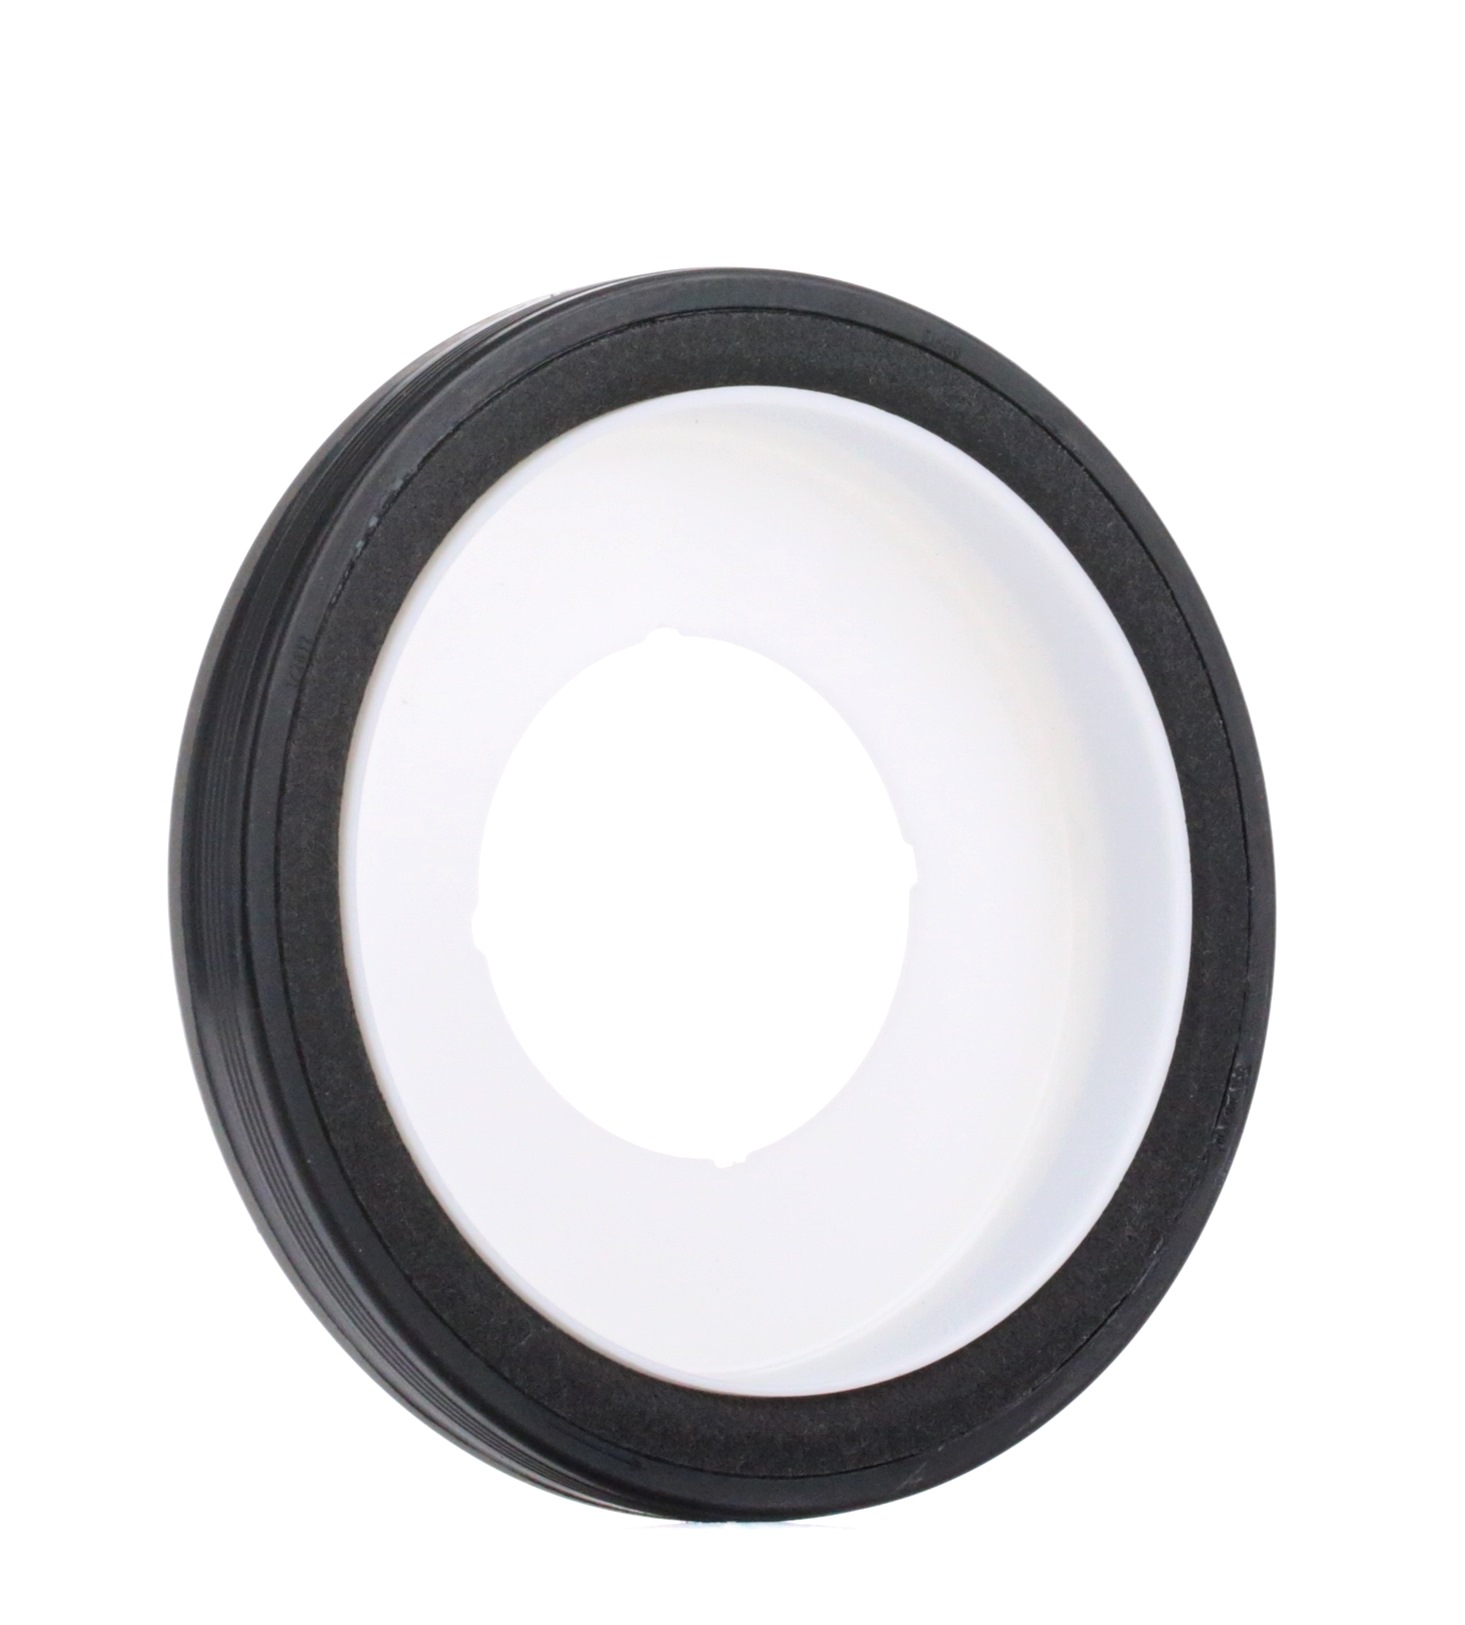 ELRING 728.880 Crankshaft seal with mounting sleeve, PTFE (polytetrafluoroethylene)/ACM (polyacrylate rubber)